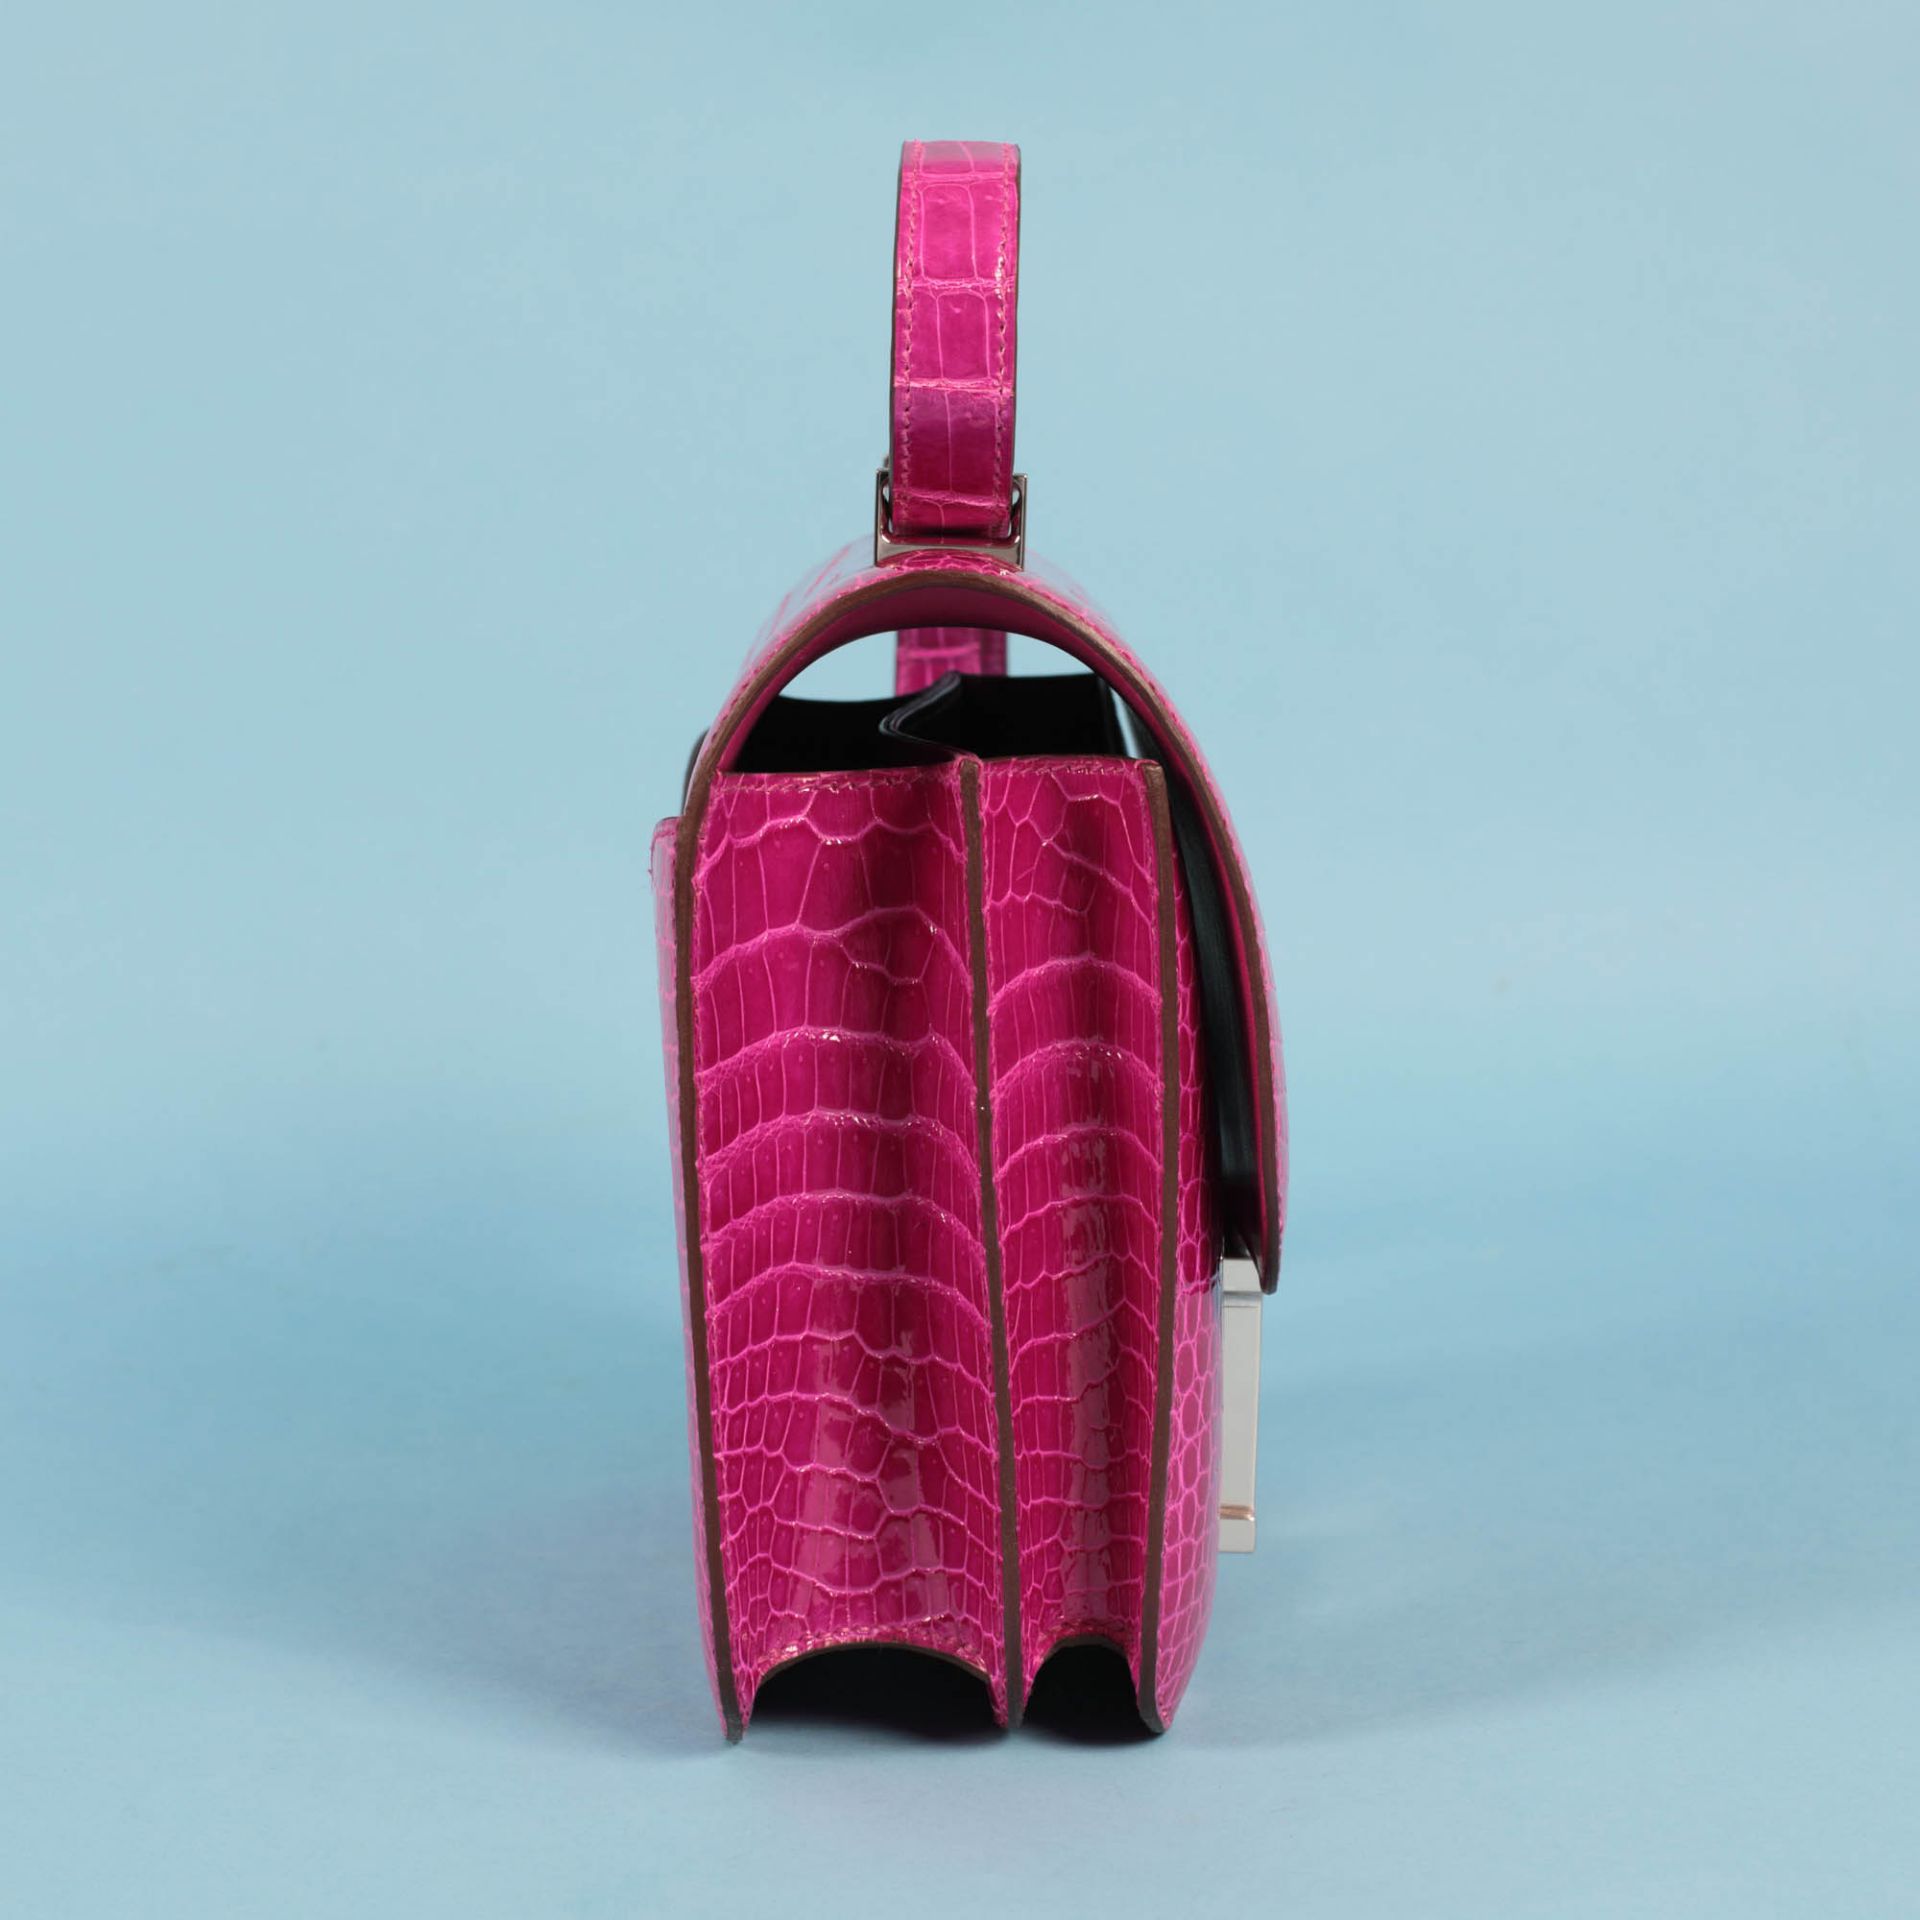 "Constance 24" - Hermès exceptional bag, crocodile leather, colour Rose Scheherazade, for women - Bild 3 aus 8